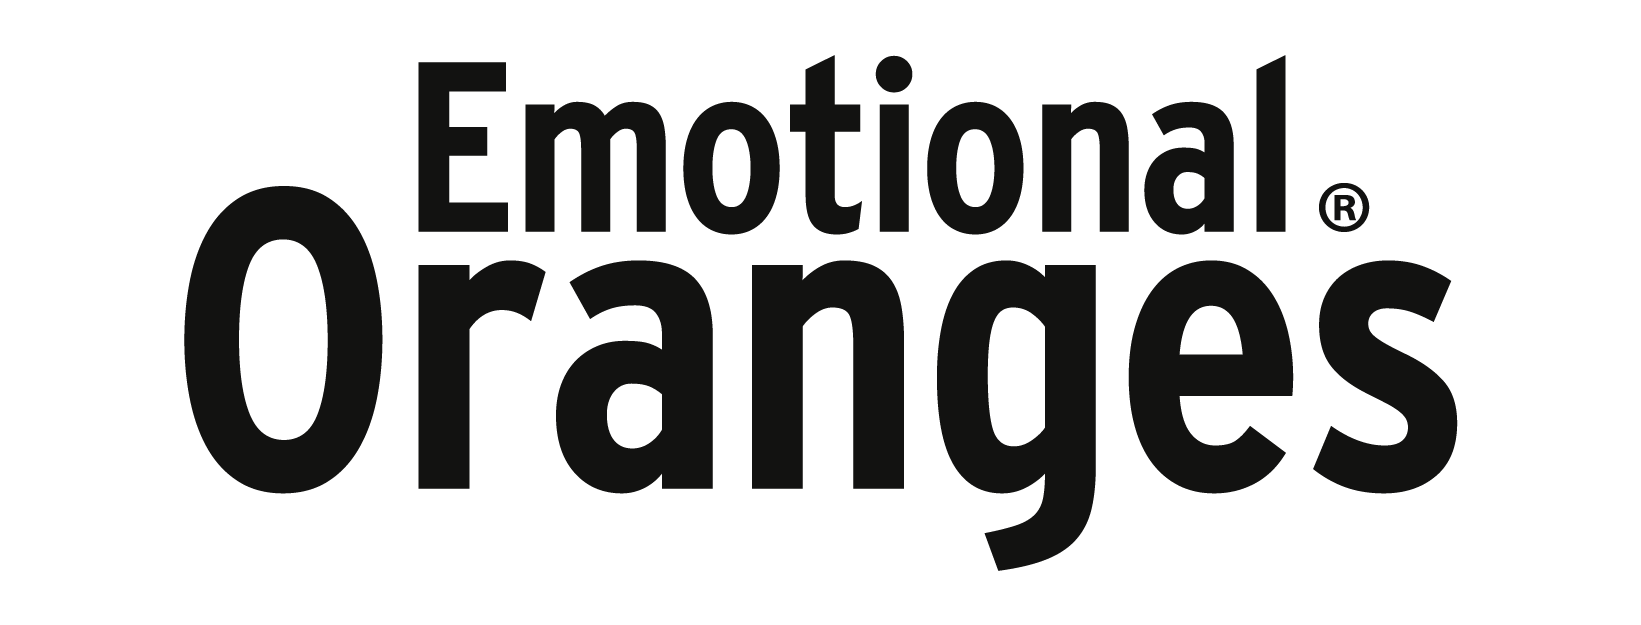 Emotional Oranges Help Center logo